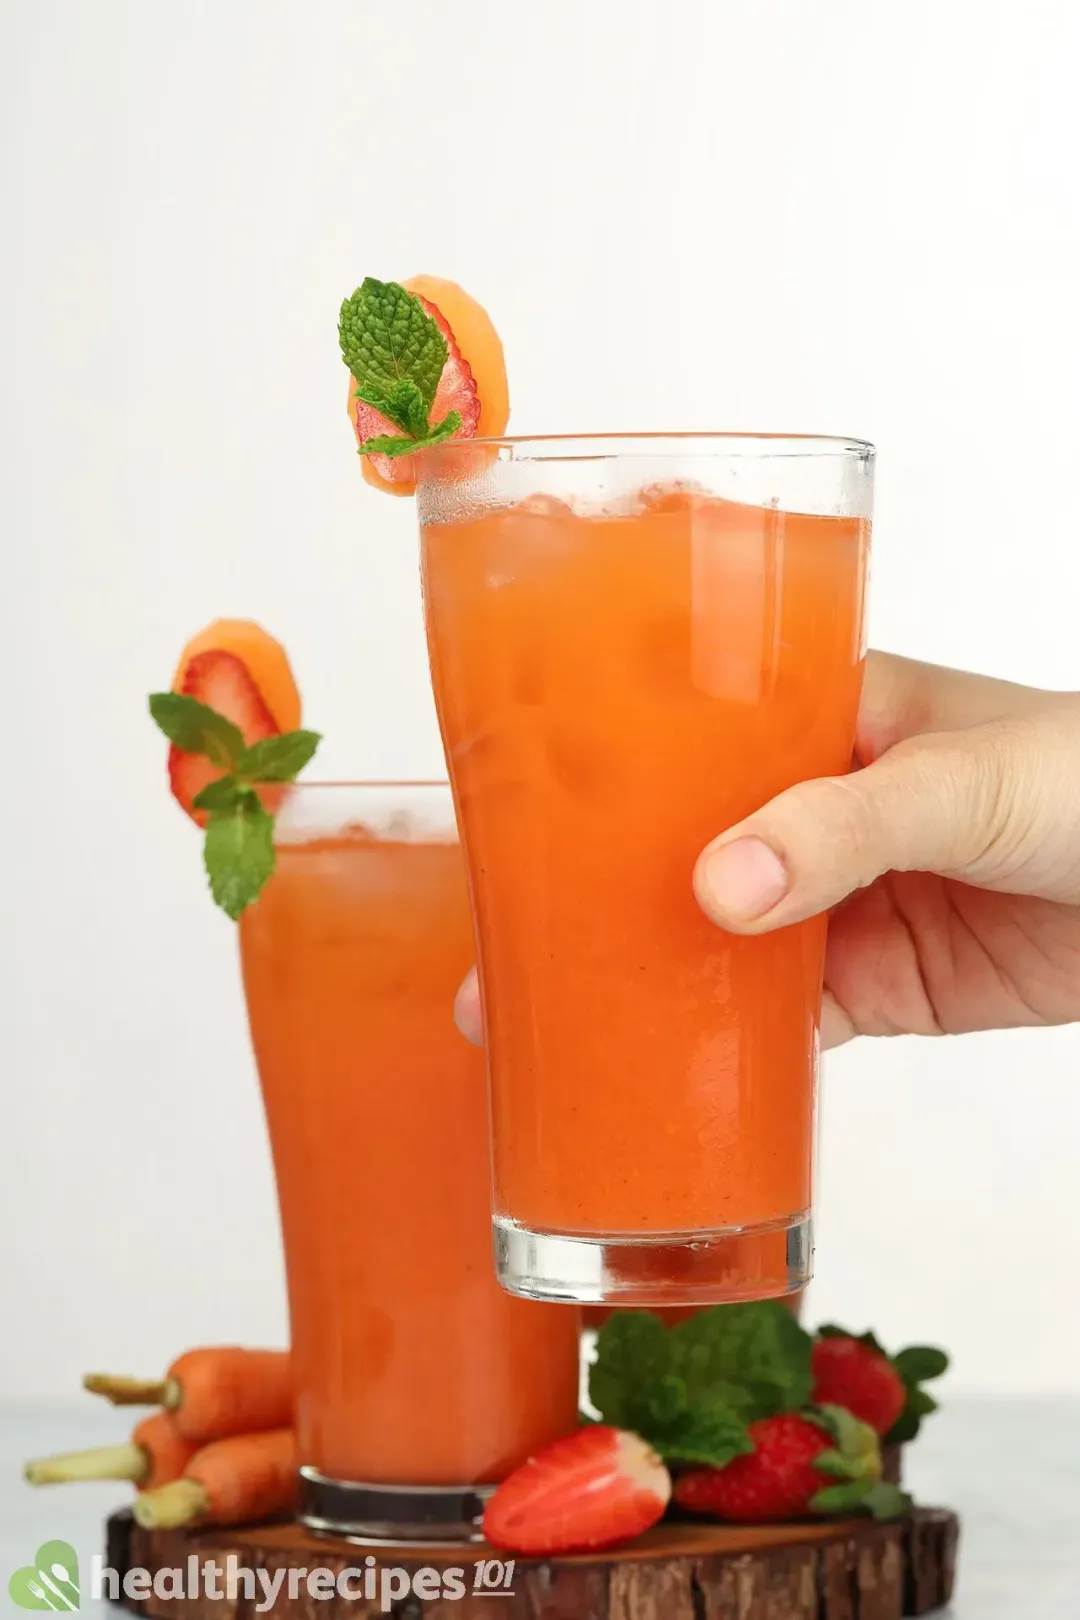 Homemade Strawberry Carrot Juice